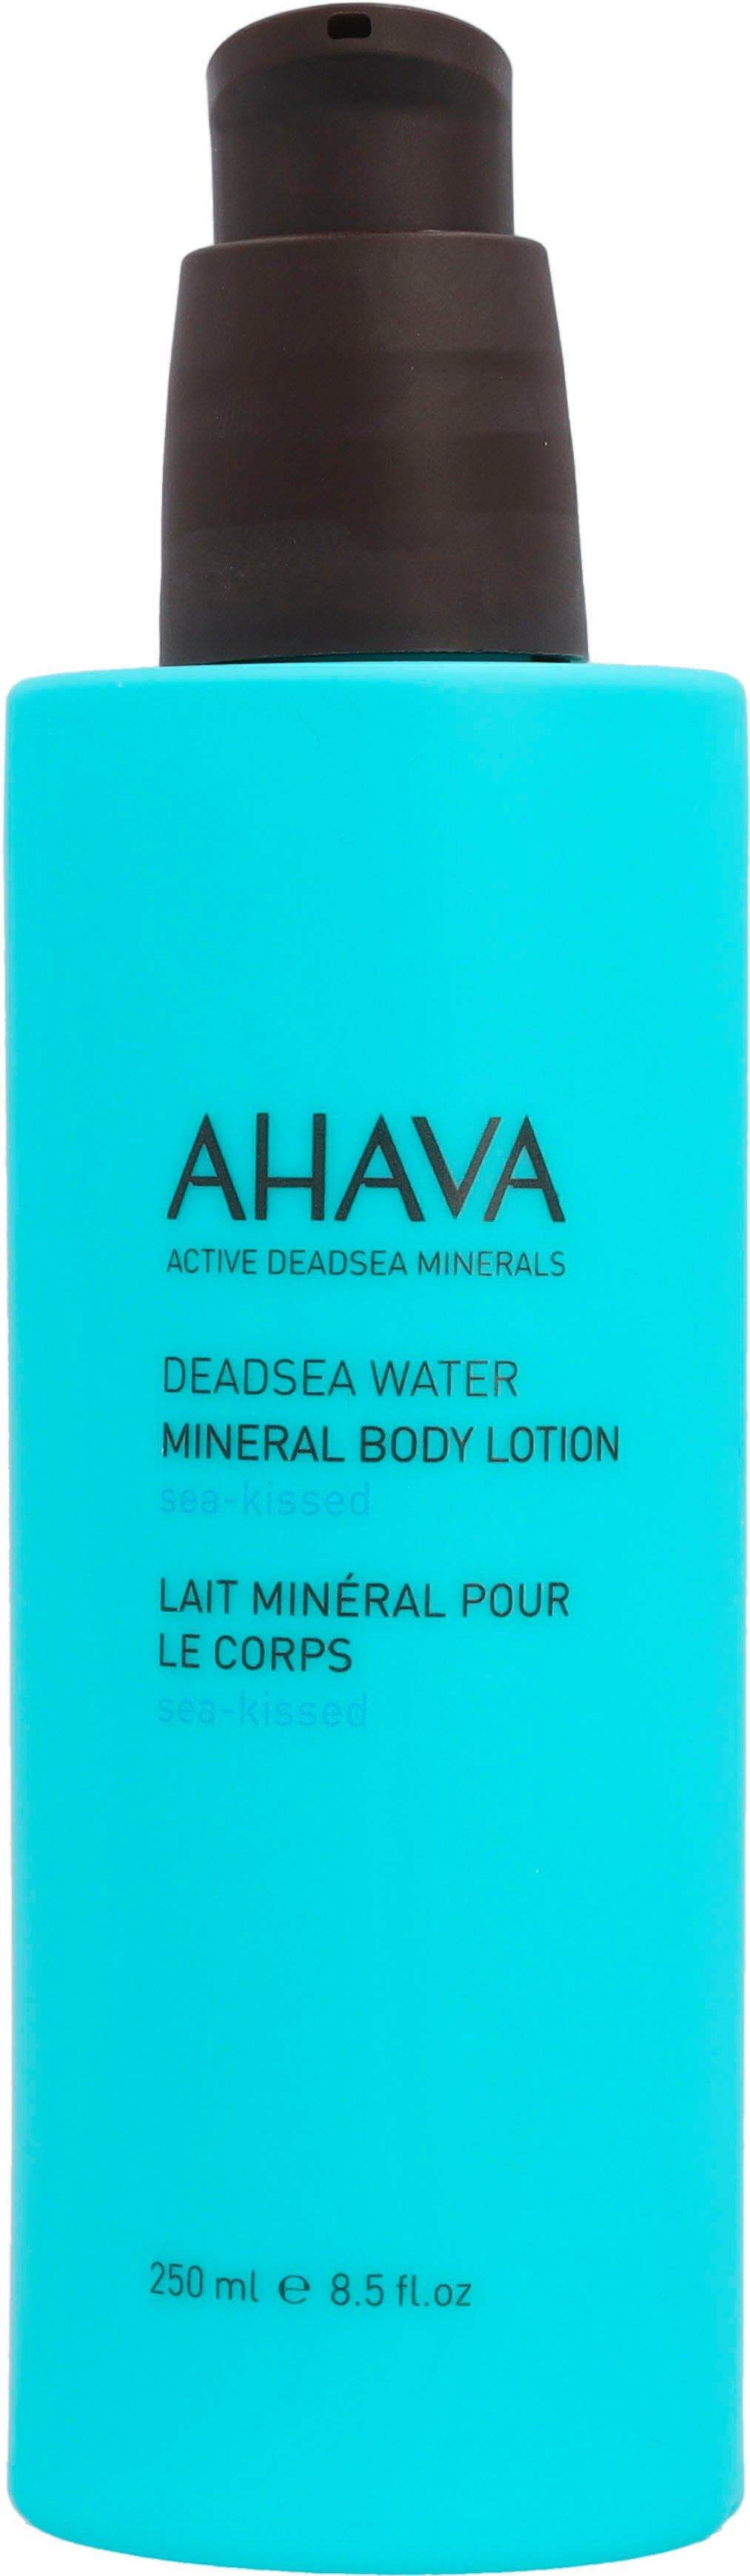 AHAVA Körperlotion Sea-Kissed Lotion Body Deadsea Water Mineral